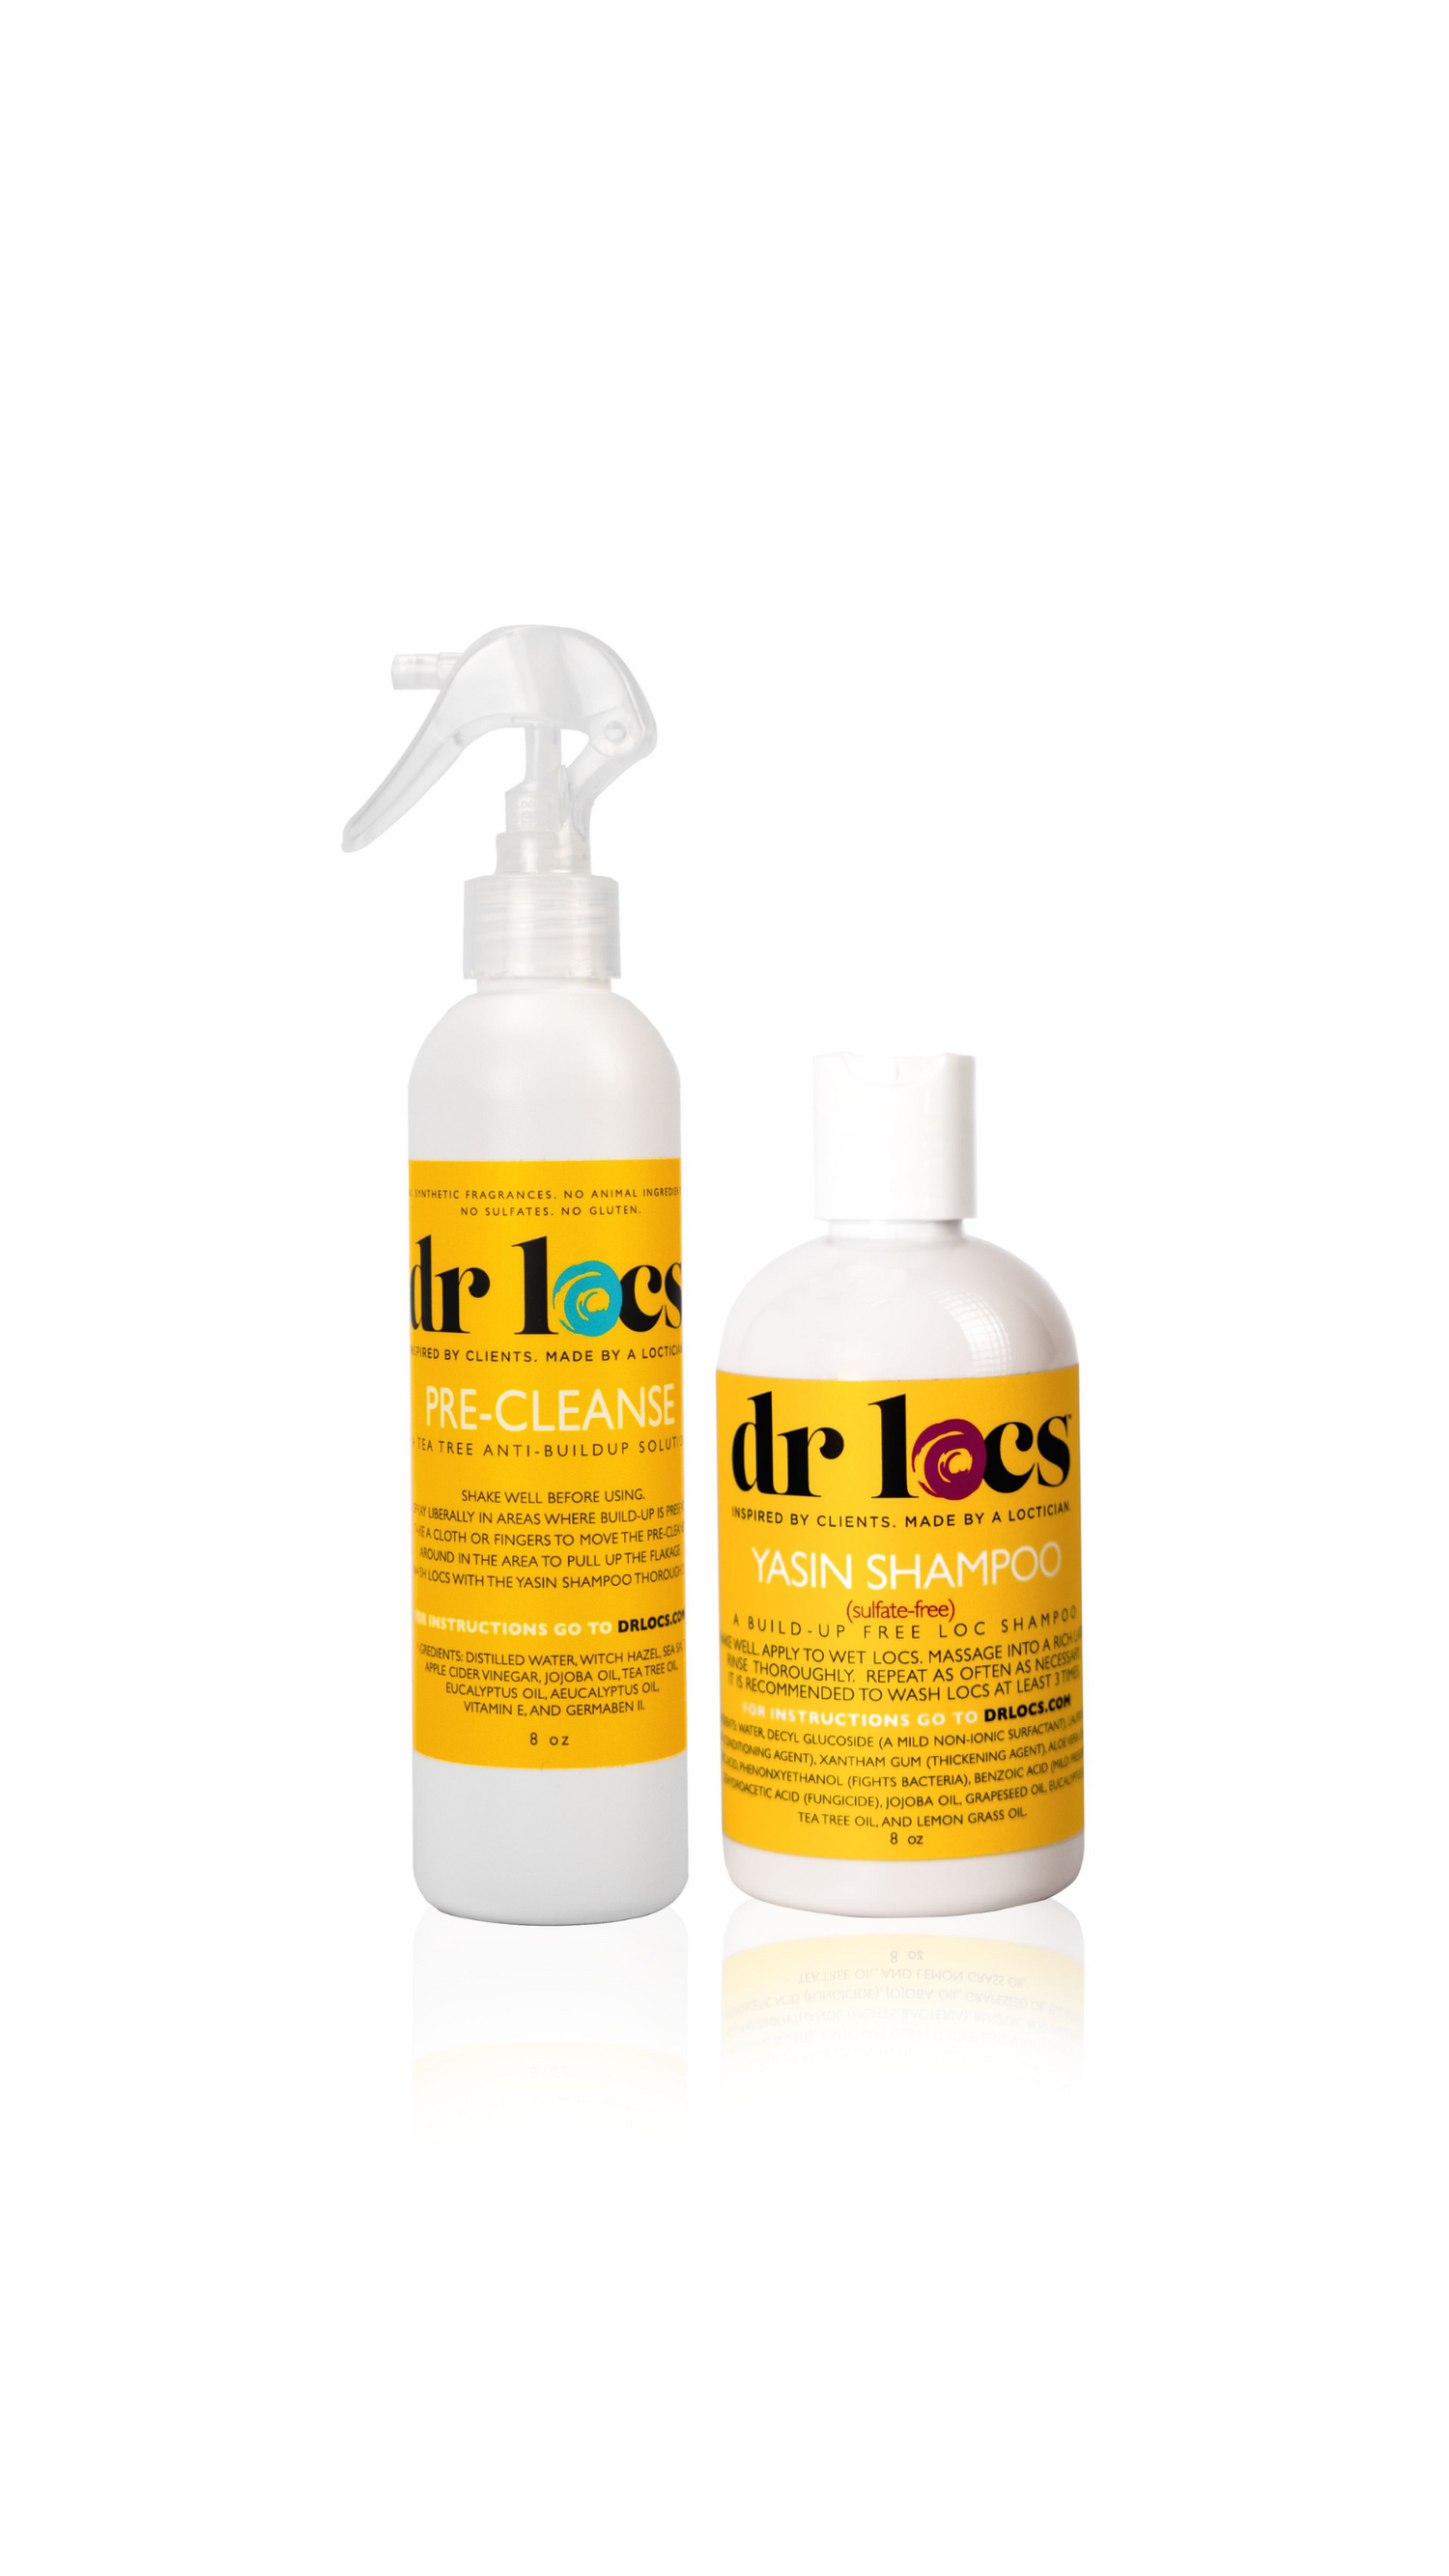 Loc Detox Products